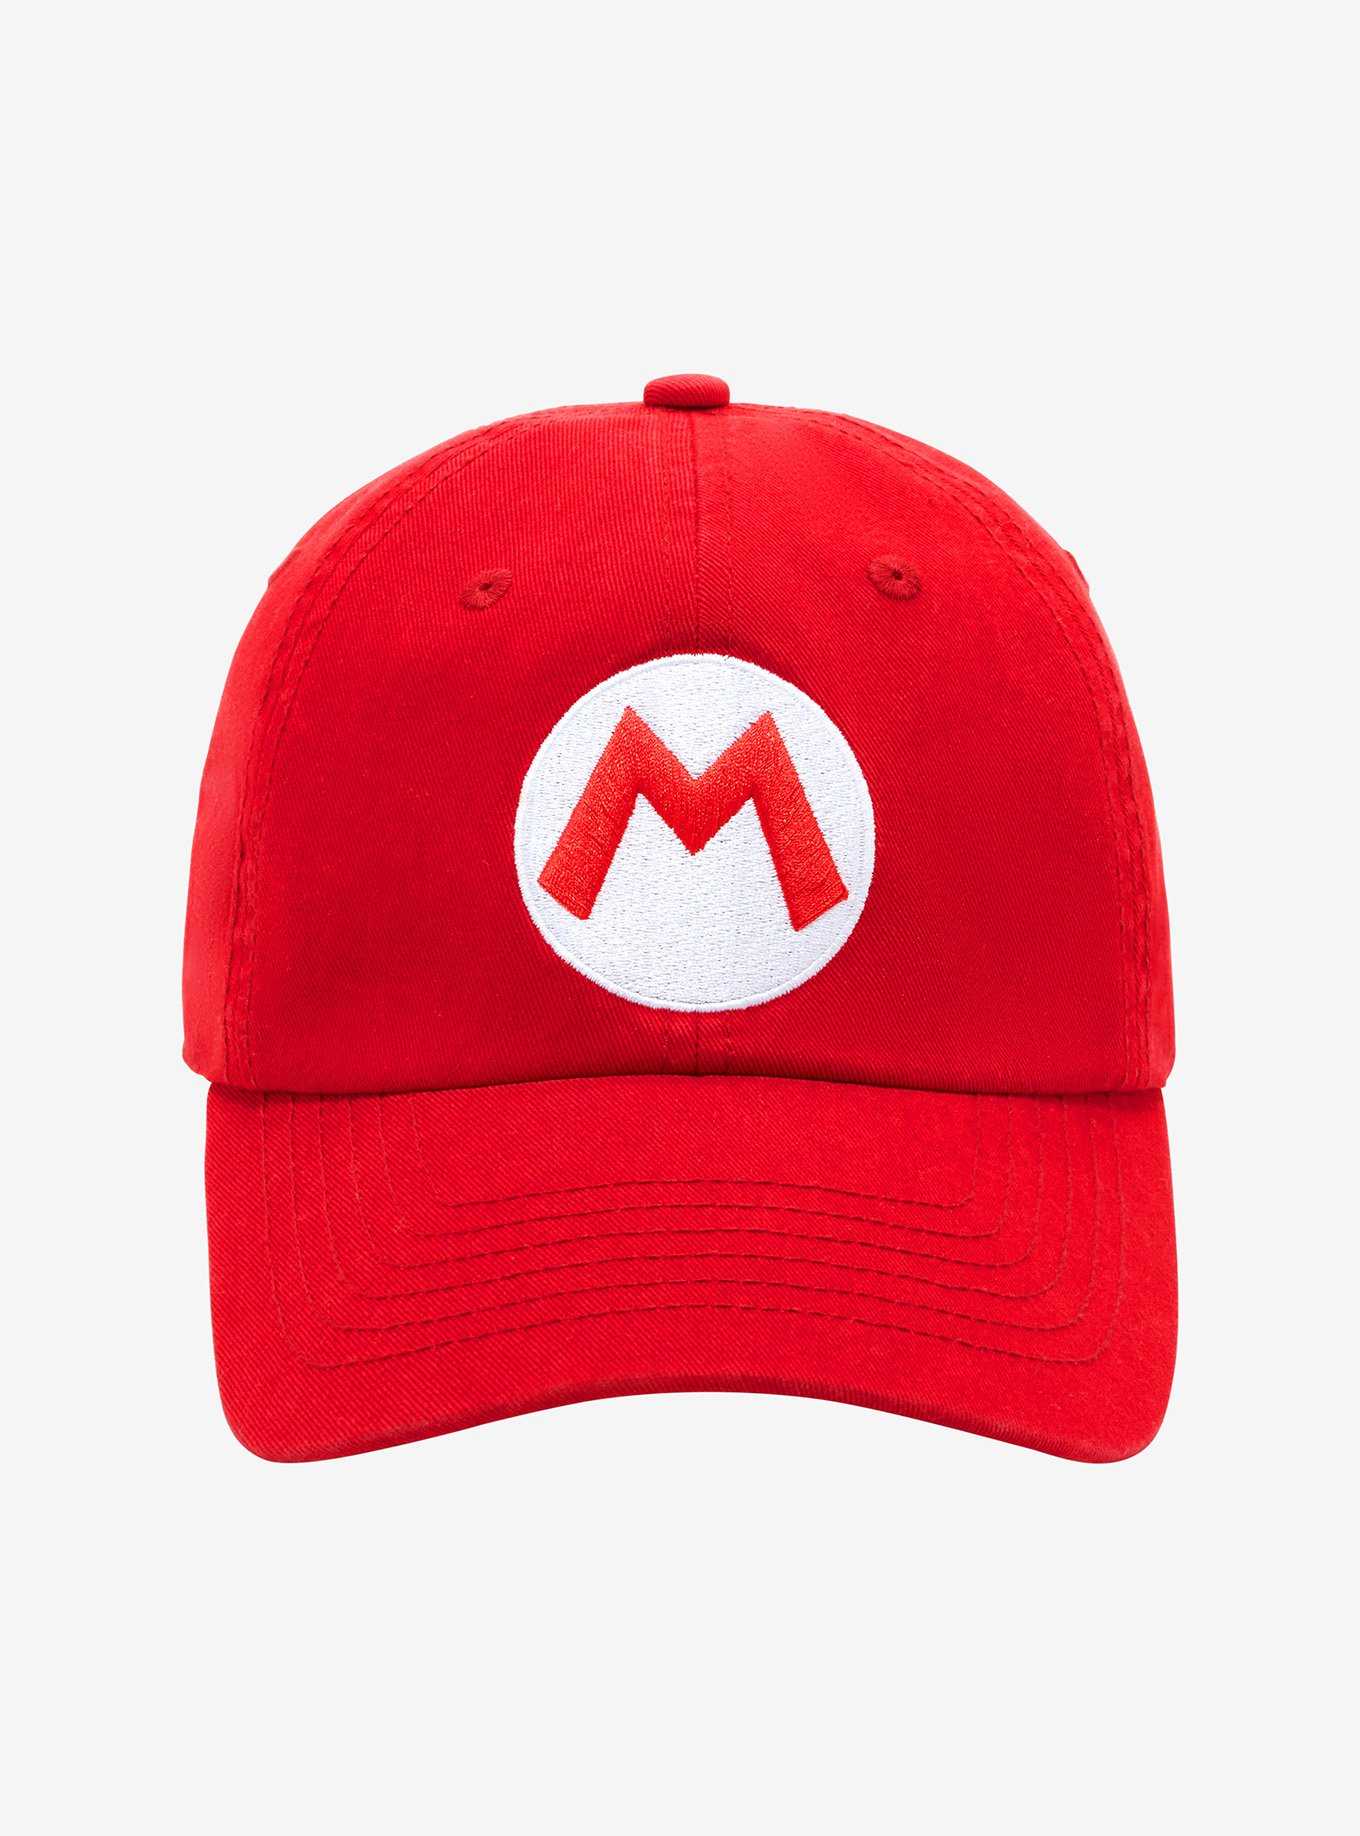 Nintendo Super Mario Bros. Mario Ball Cap, , hi-res